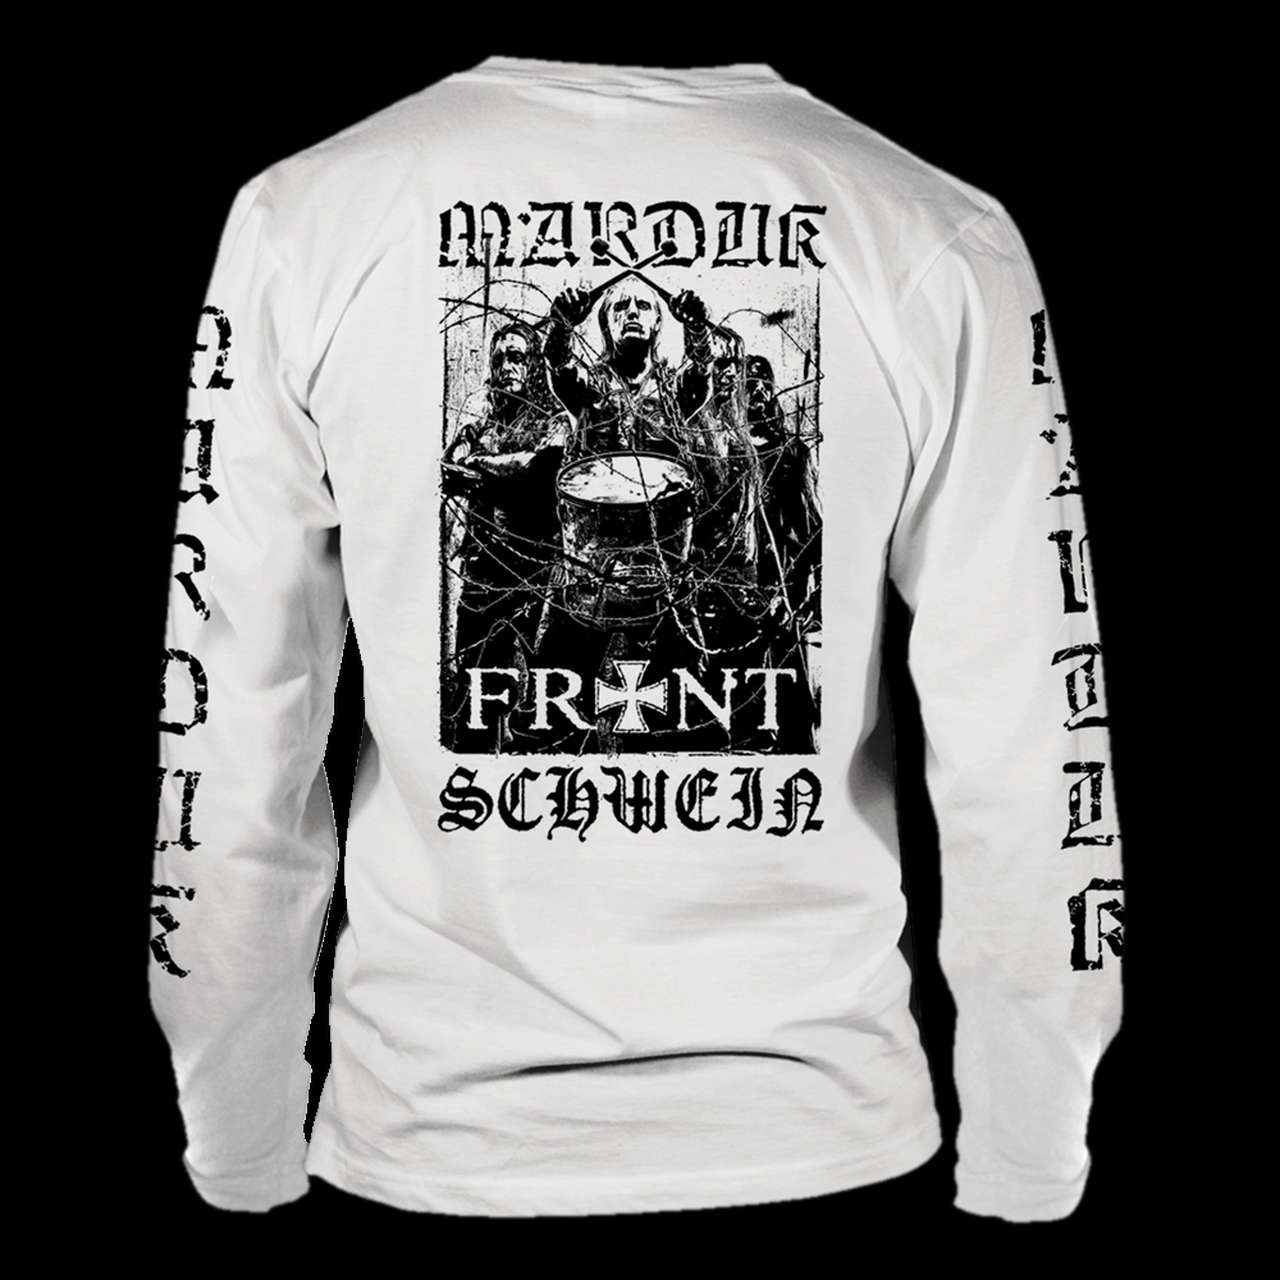 Marduk - Frontschwein (White) (Long Sleeve T-Shirt)